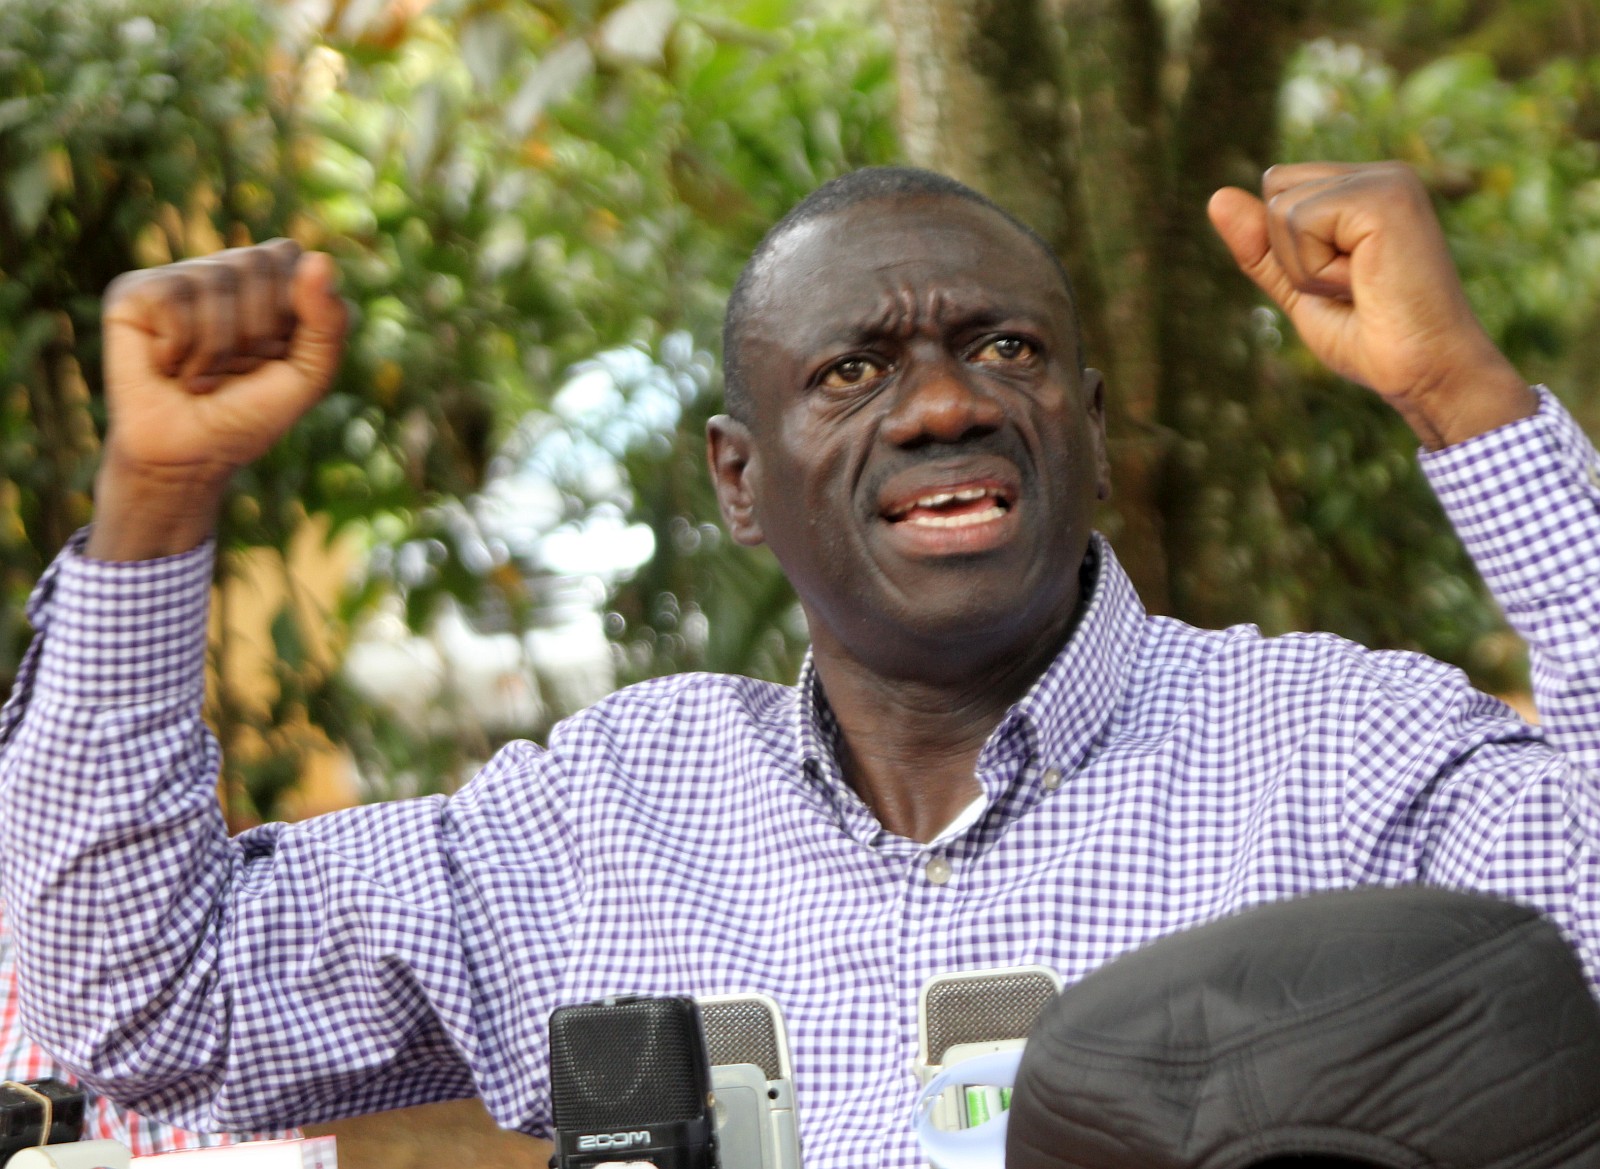 kizza-Besigye-leader-